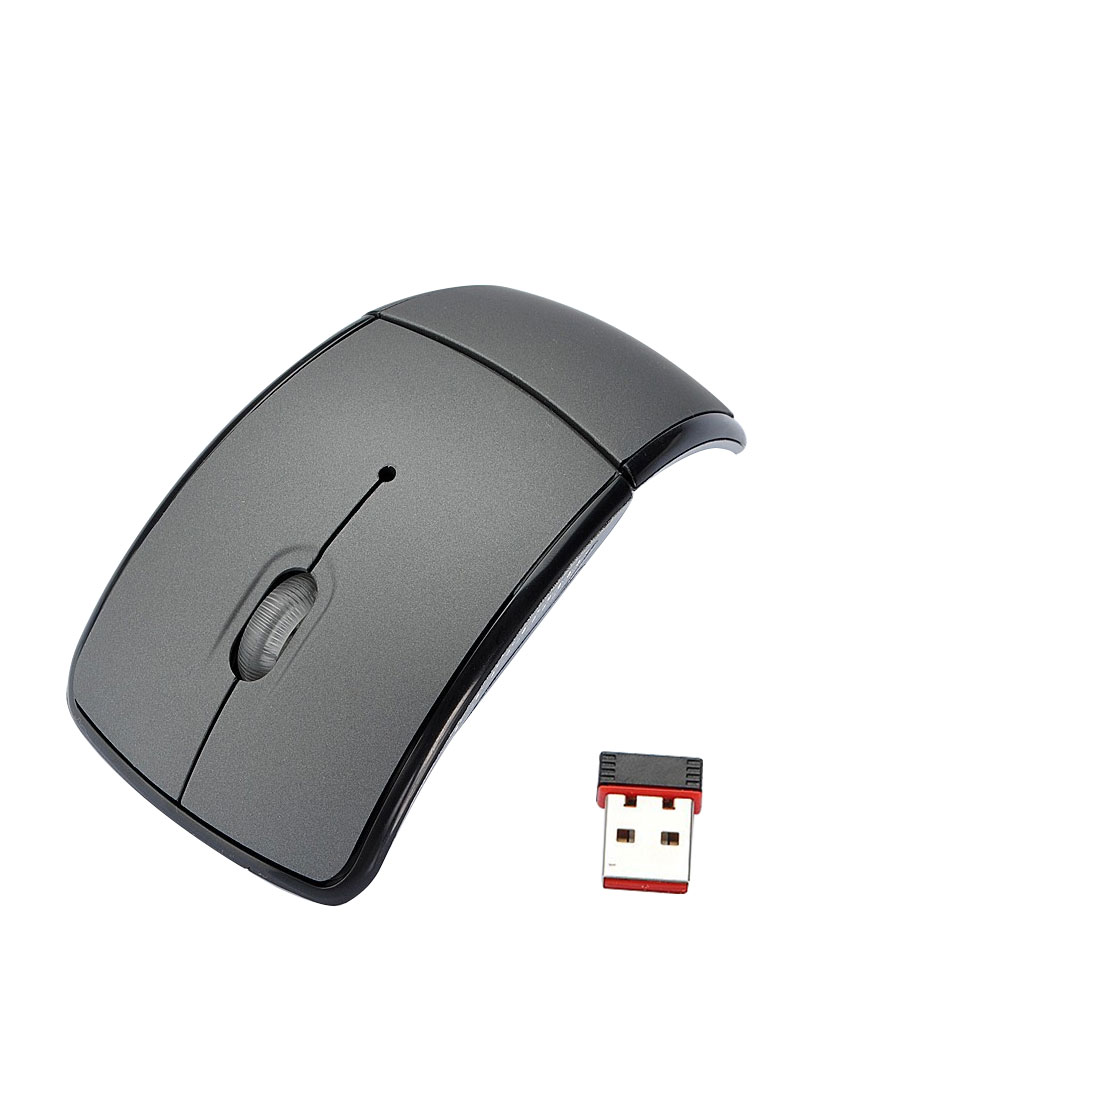 Etmakit Ultrathin Виткање Безжично Глувче за КОМПЈУТЕР Лаптоп Компјутер Мини USB 2.4 Ghz Свитлива